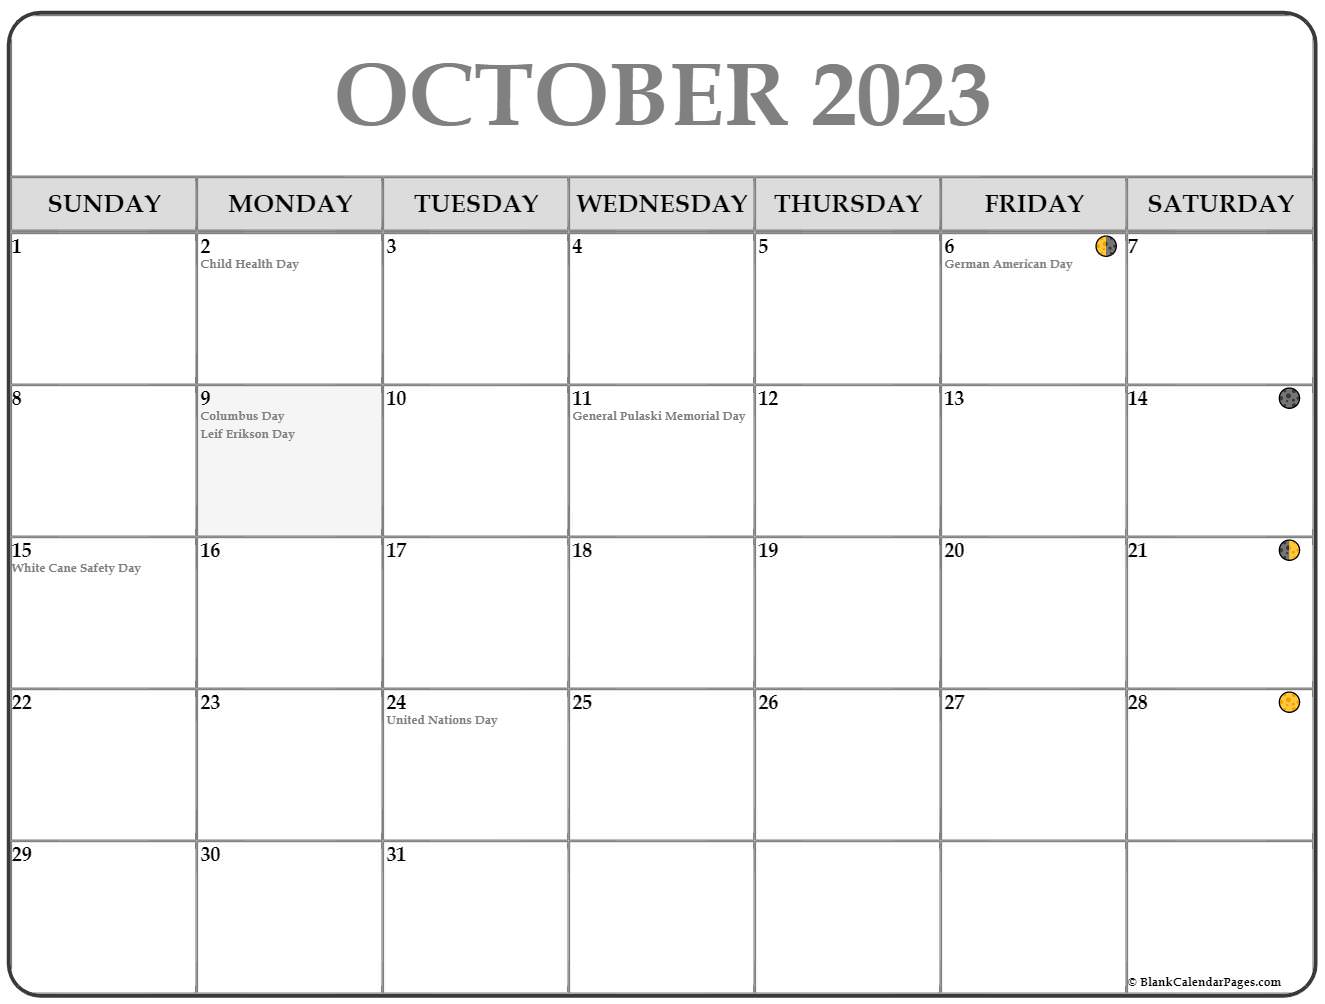 October 2023 Lunar Calendar Moon Phase Calendar